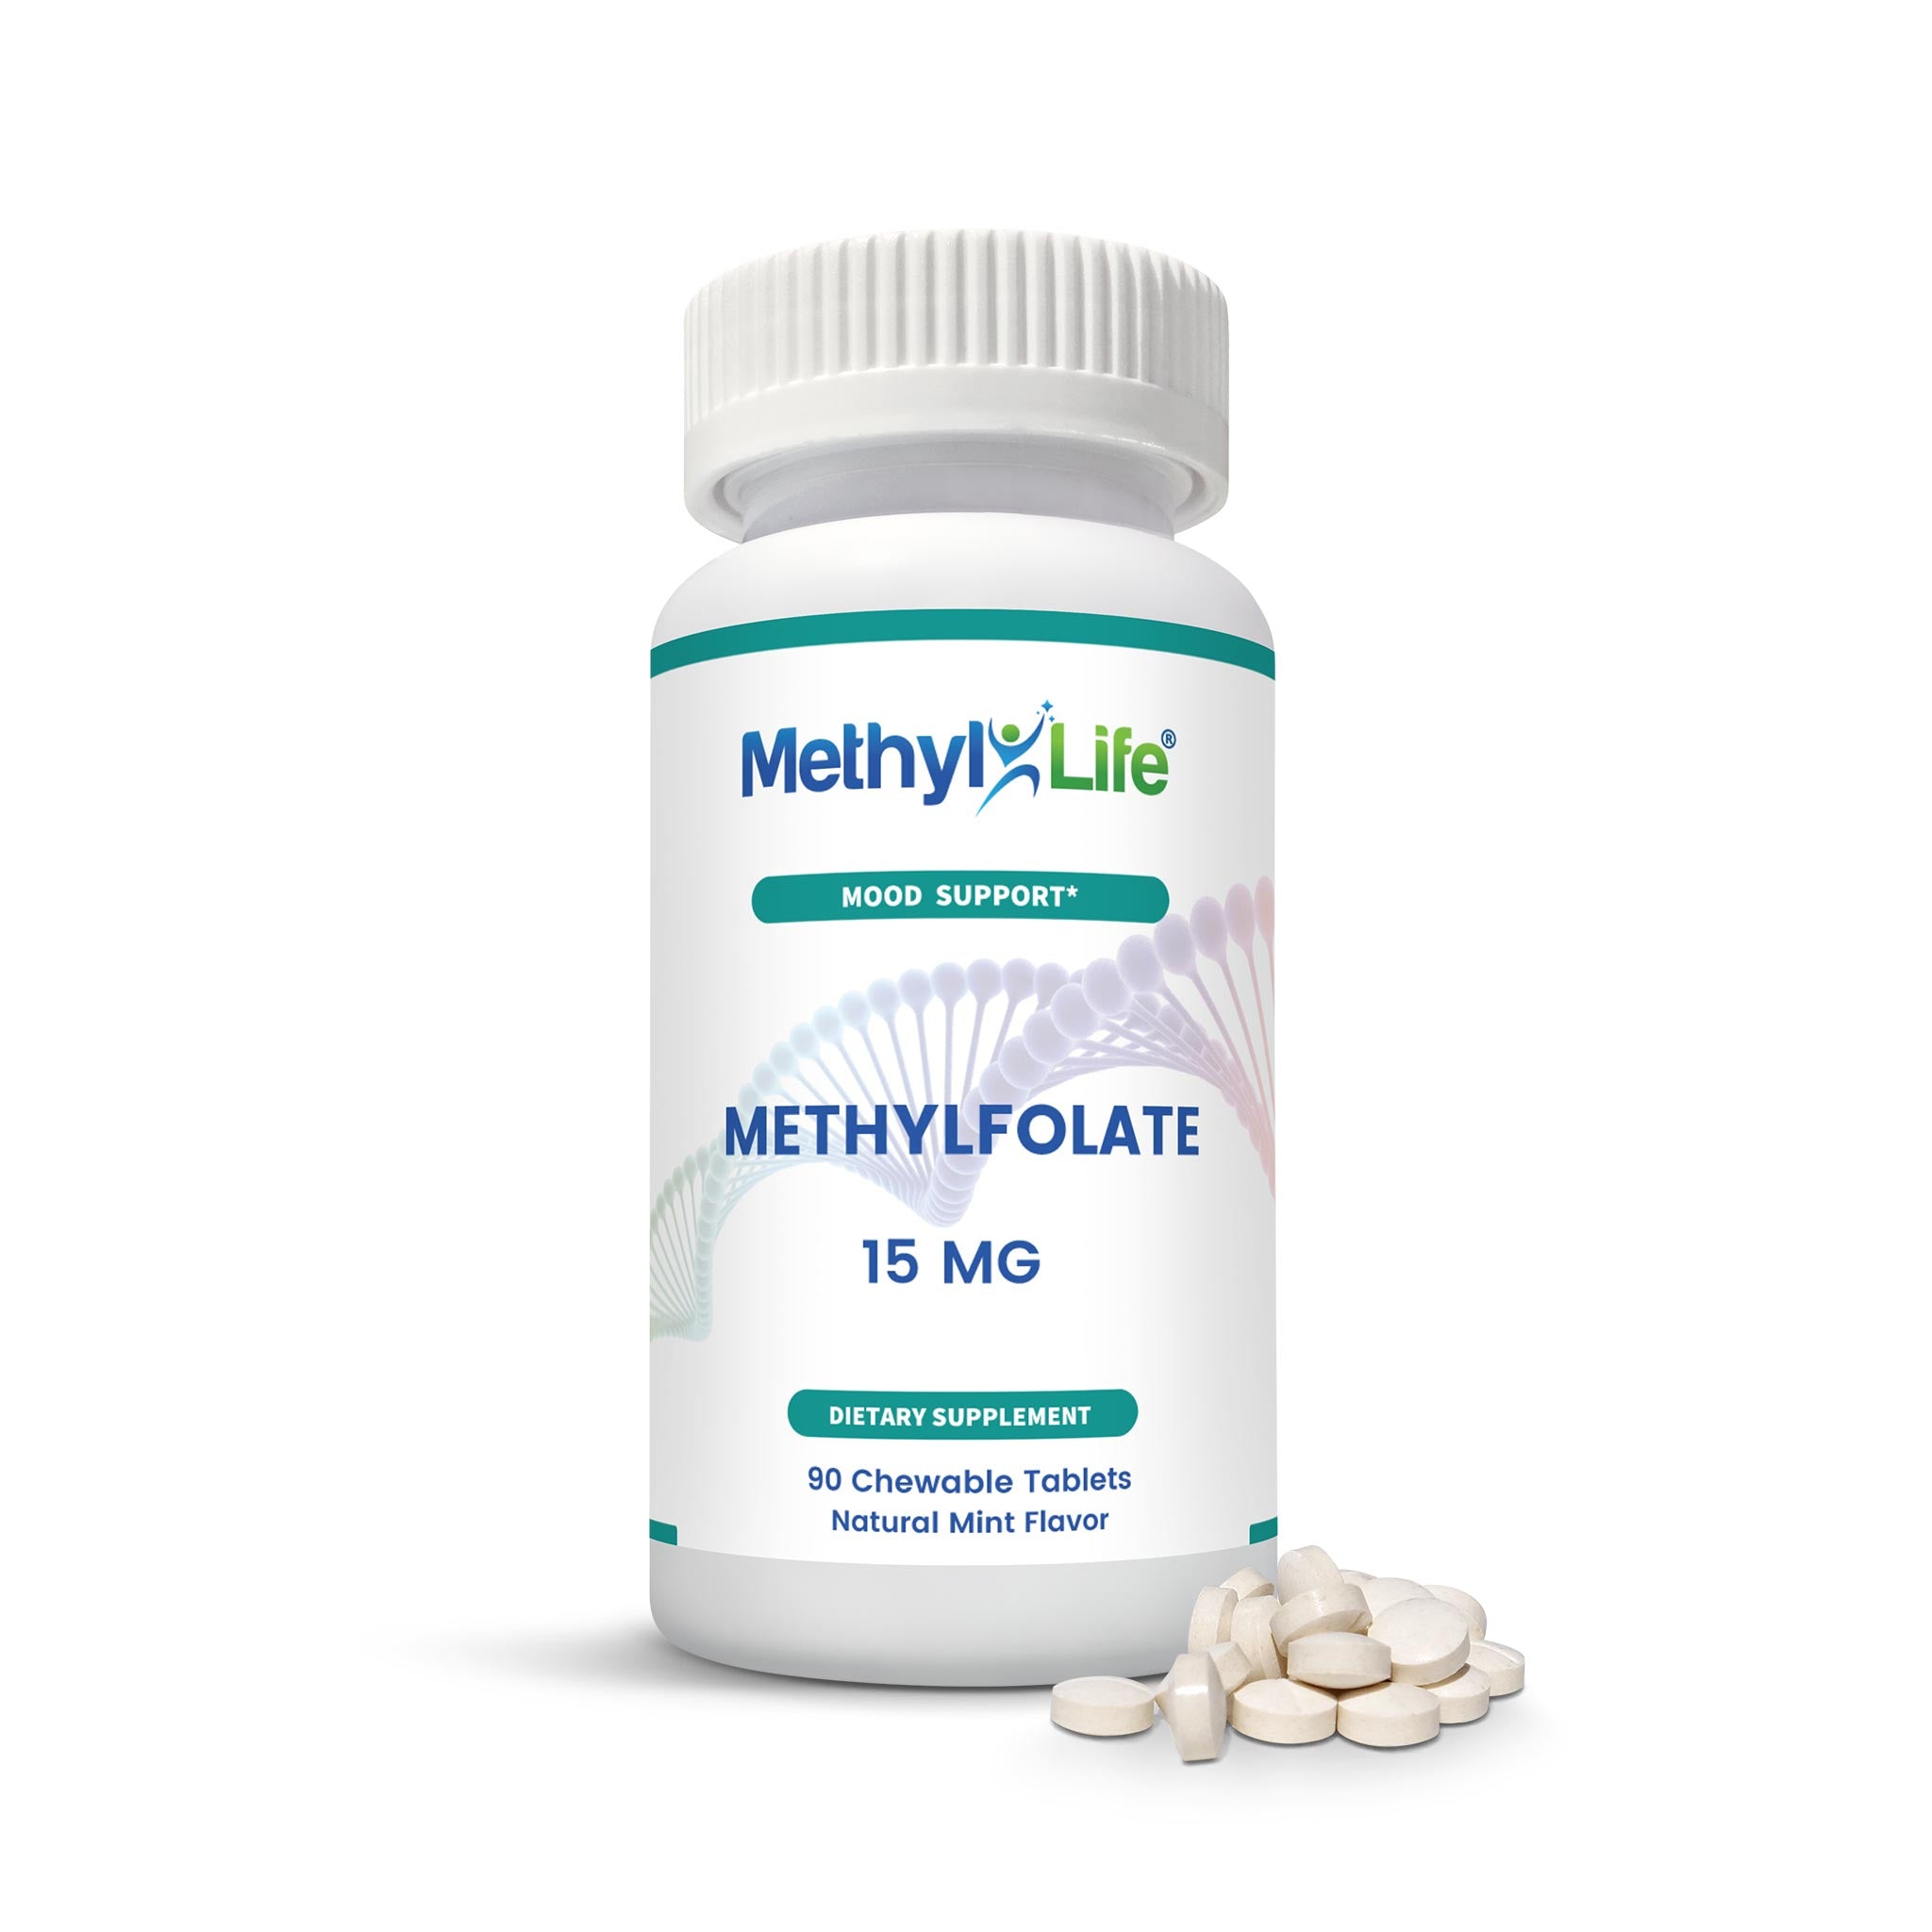 L-Methylfolate 15 mg - bottle + chew tablets - Elevate Mood - Purest L-Methylfolate - 90 ct - Methyl-Life